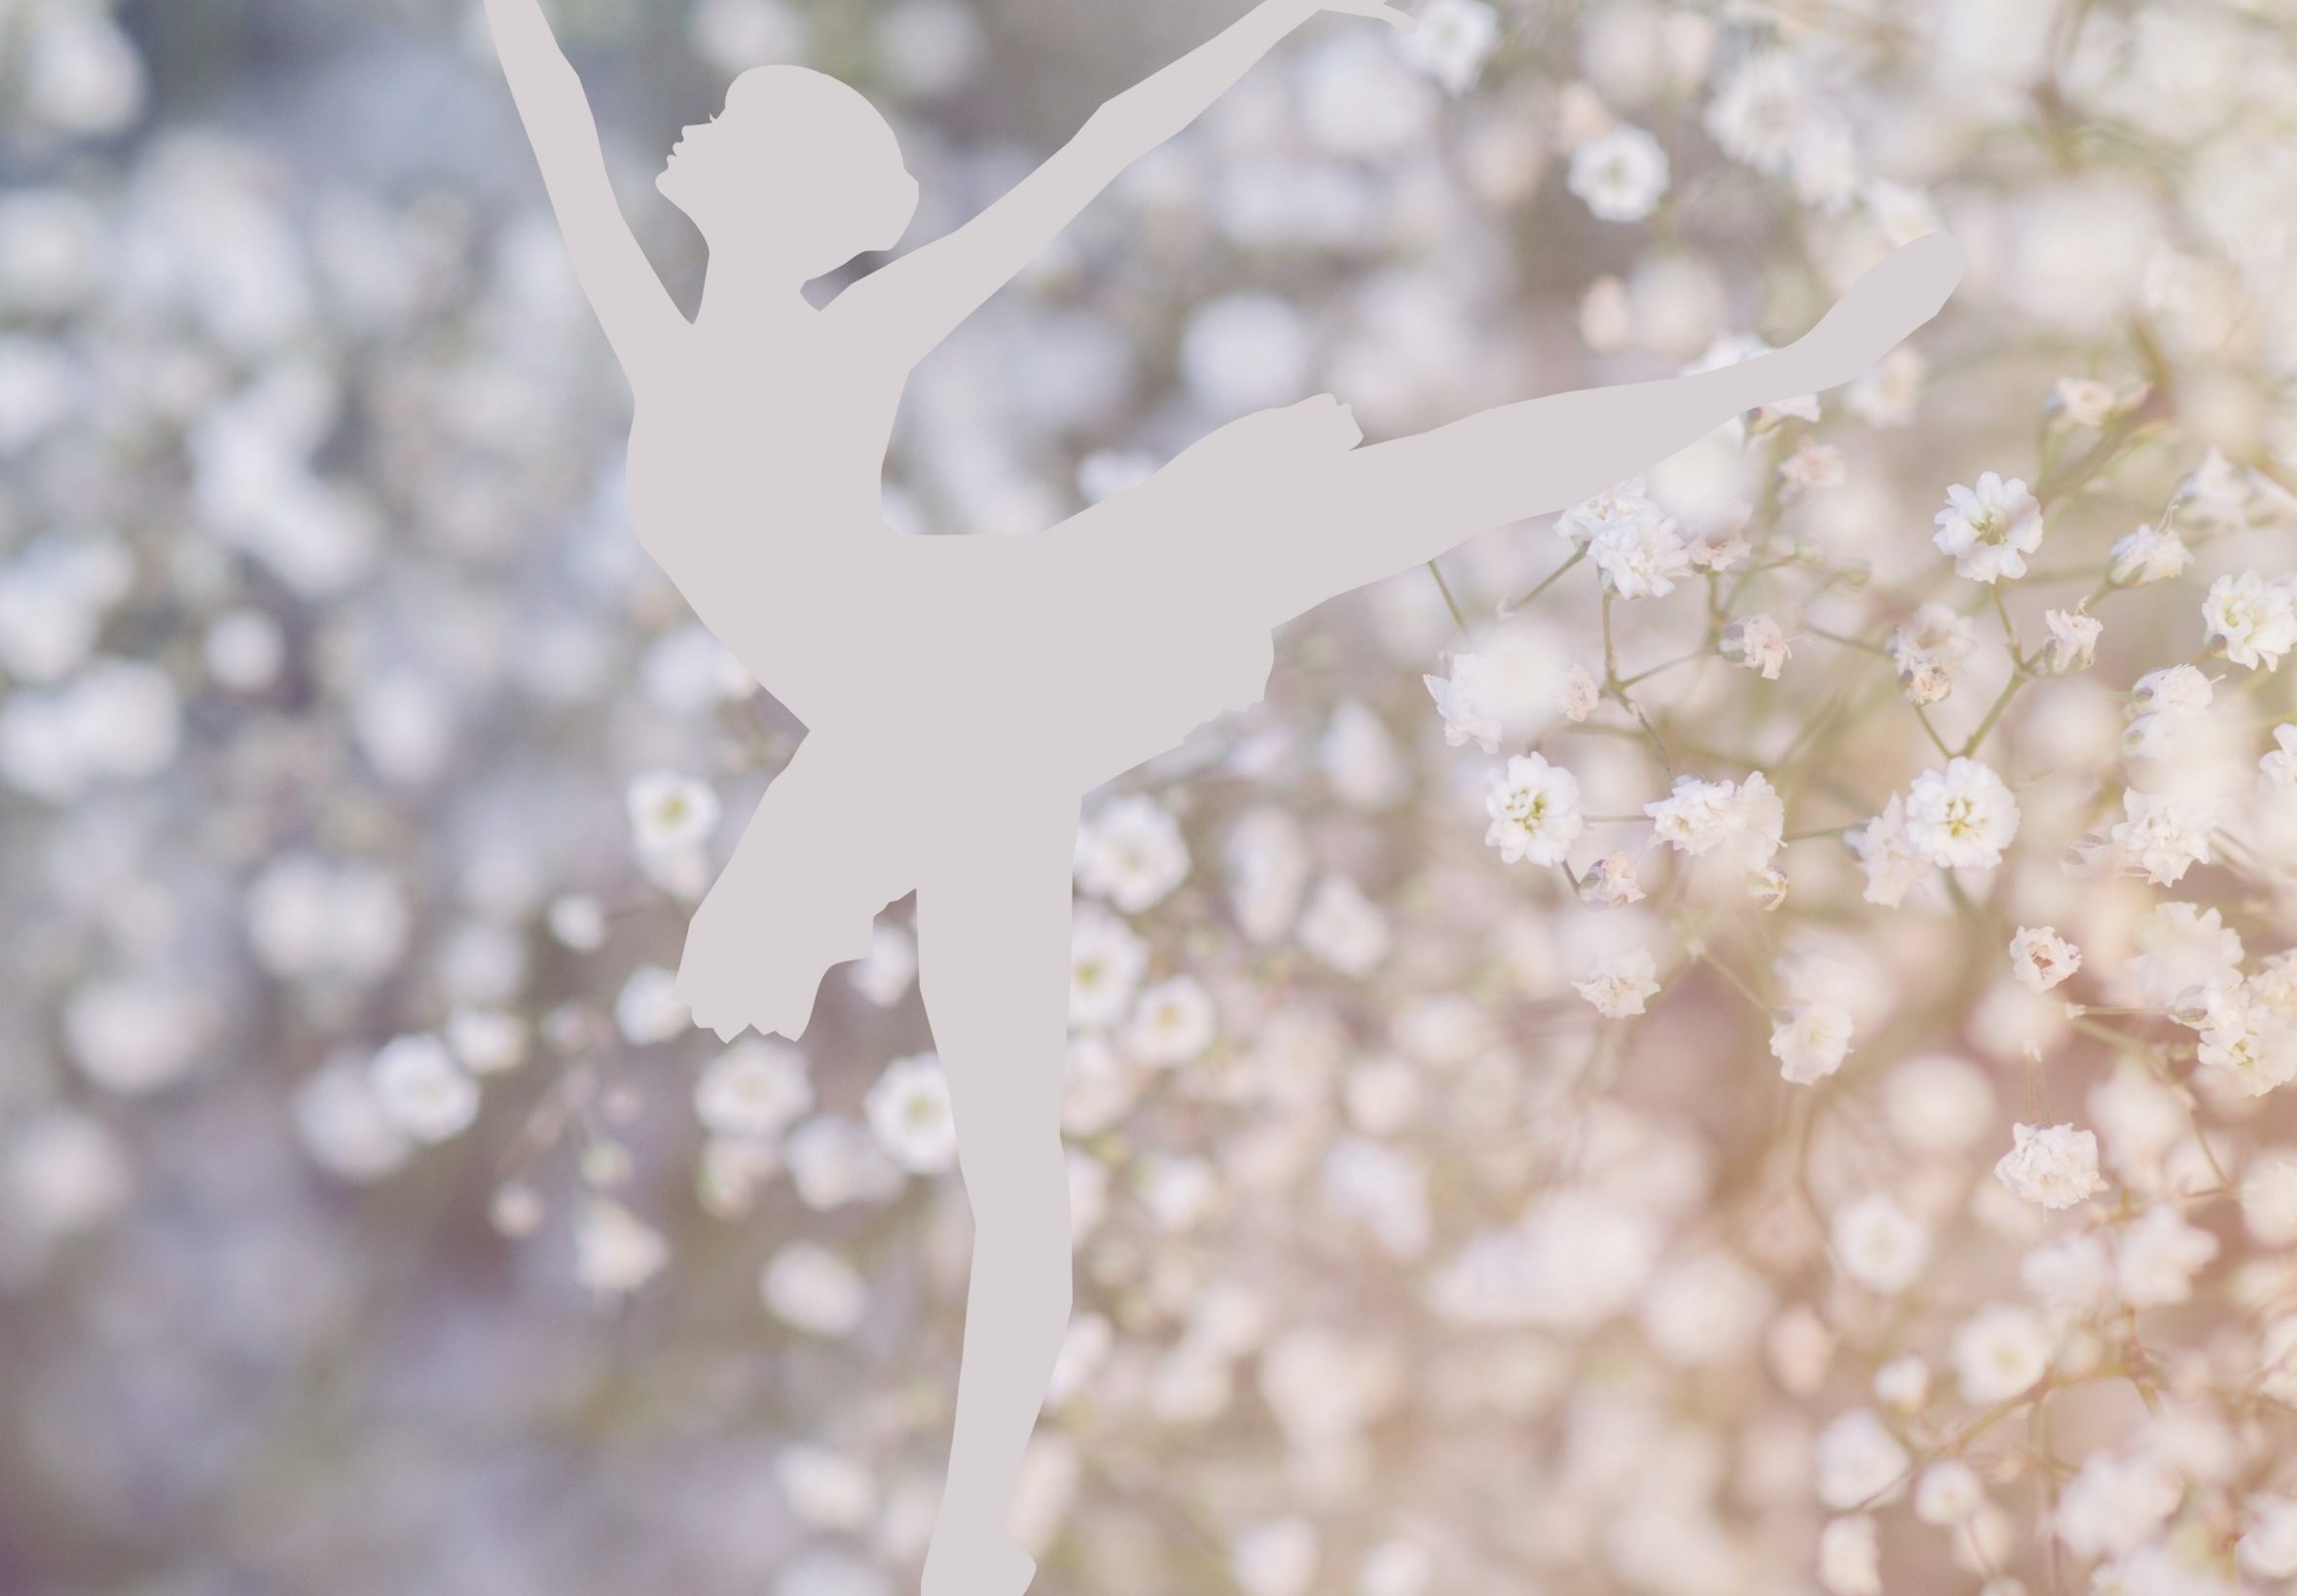 2360x1640 iPad Air wallpaper 4k Ballerina Girl Dance White Dandelion Flowers iPad Wallpaper 2360x1640 pixels resolution